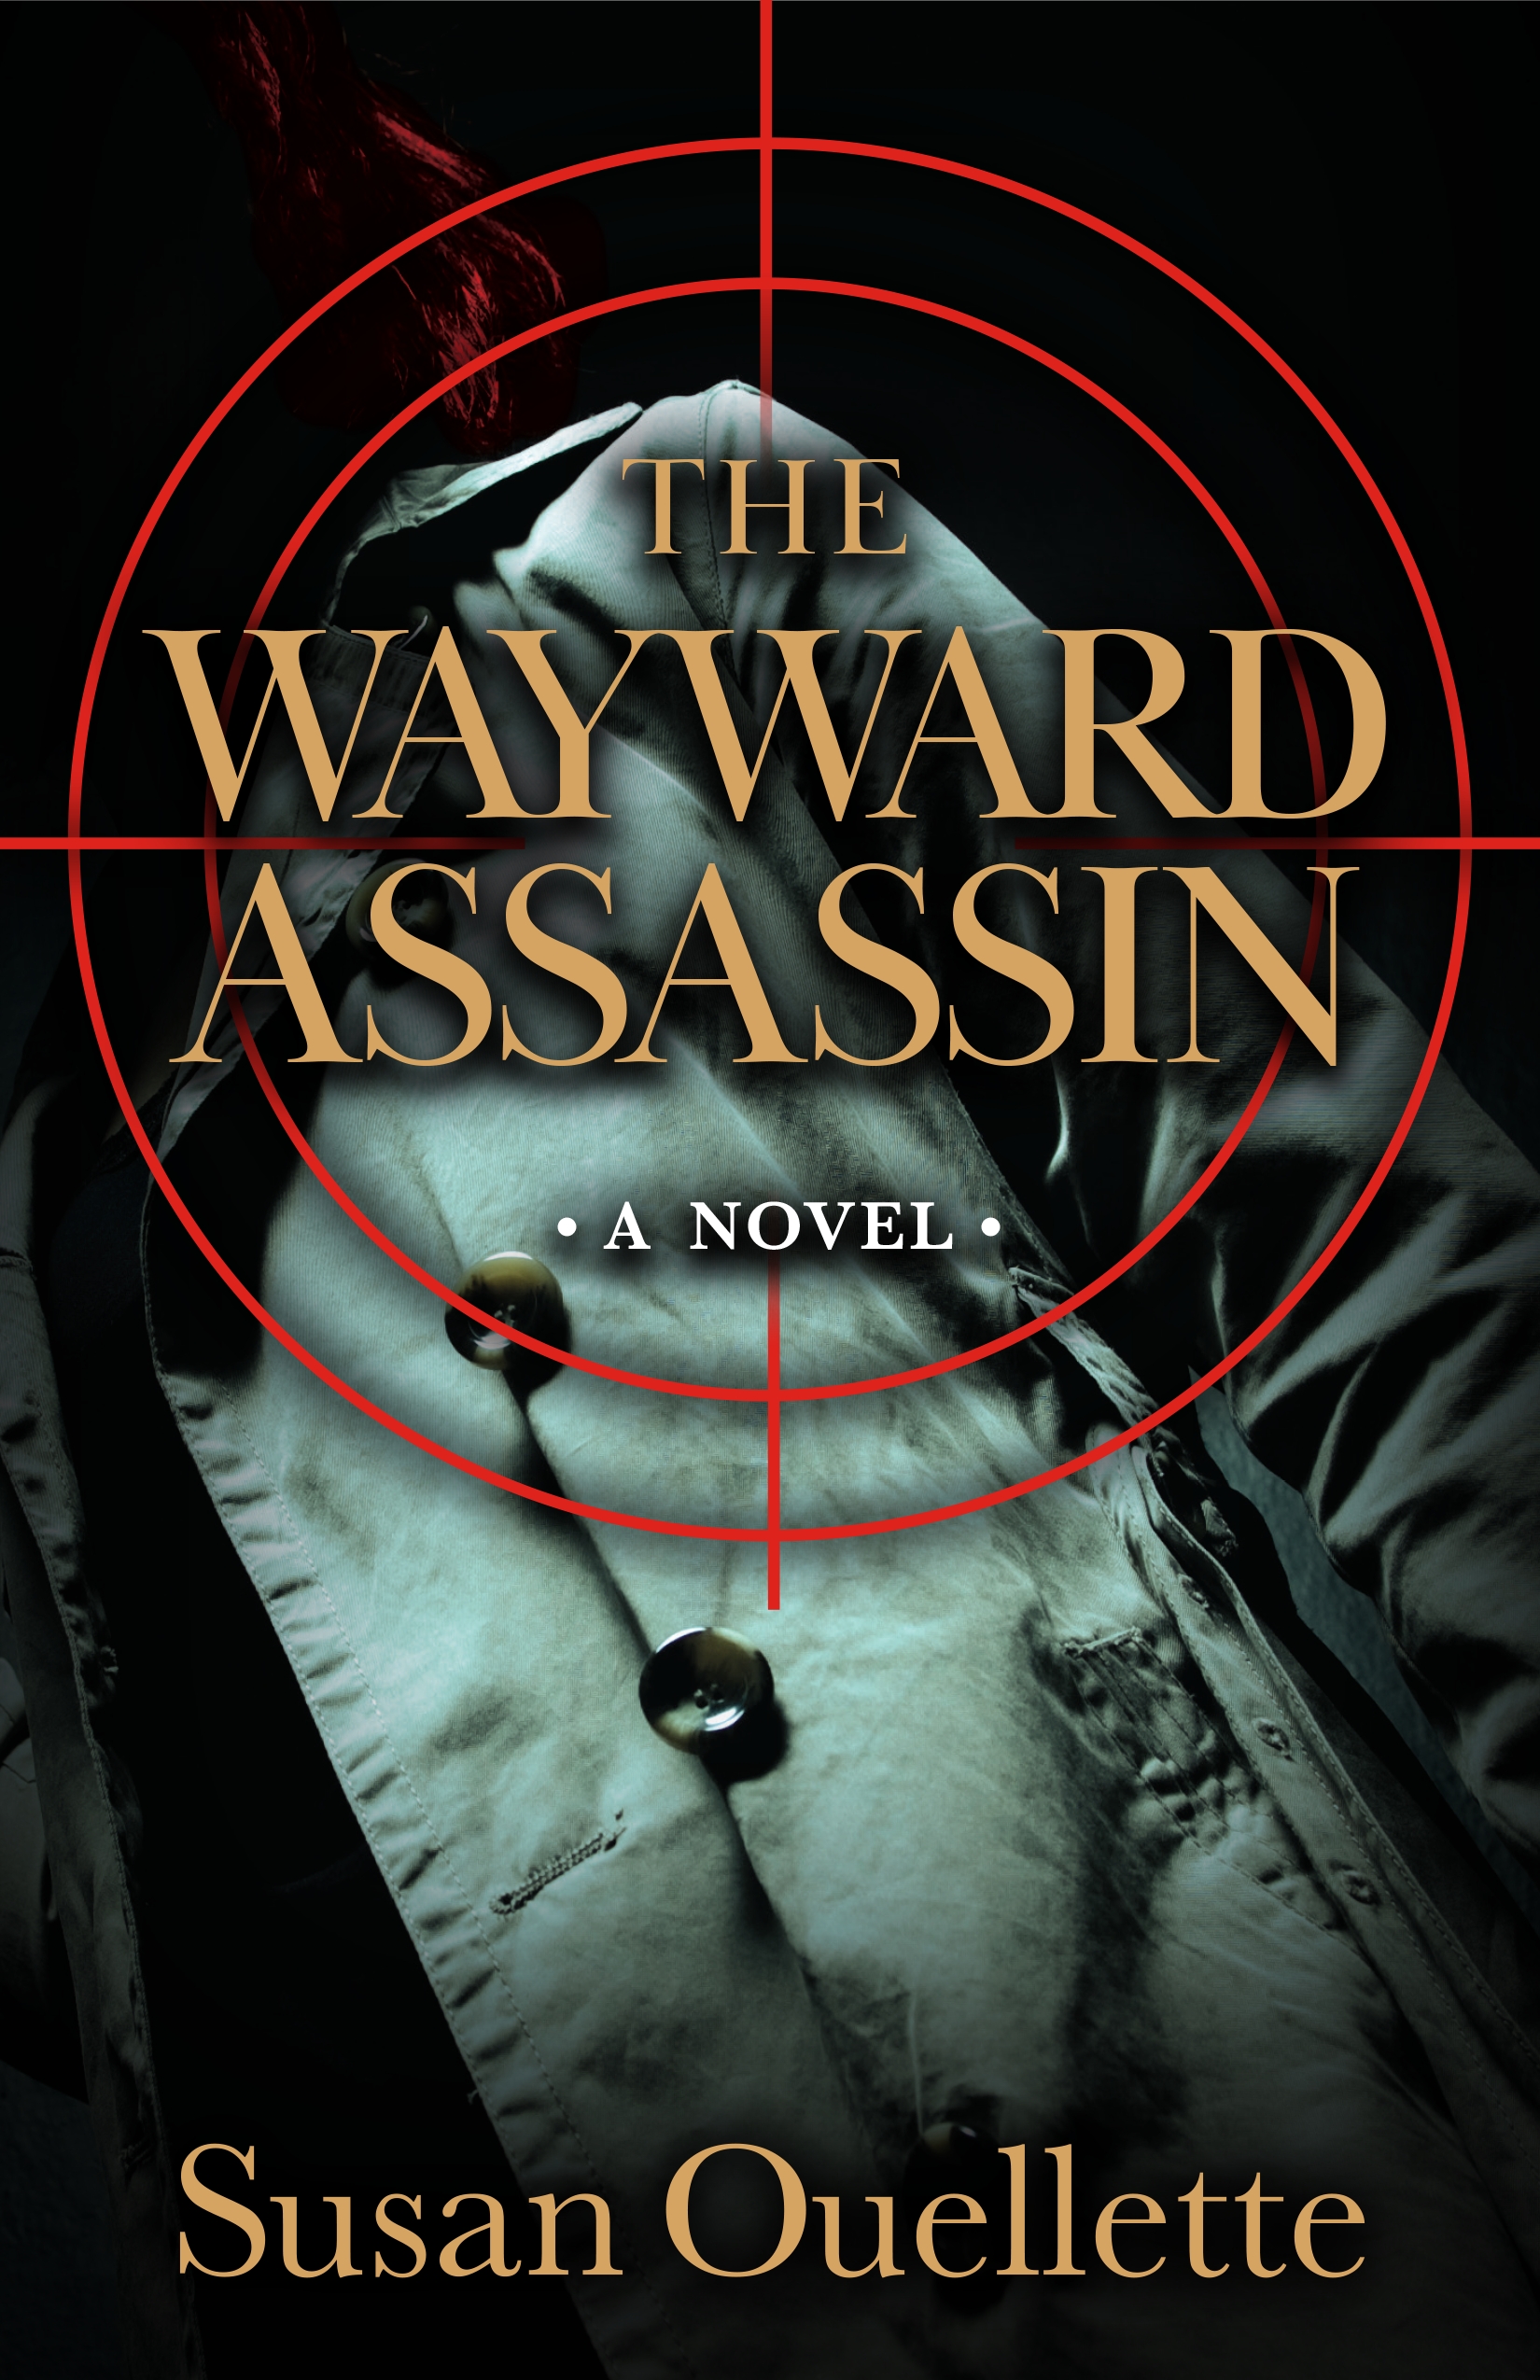 The Wayward Assassin by Susan Ouellette